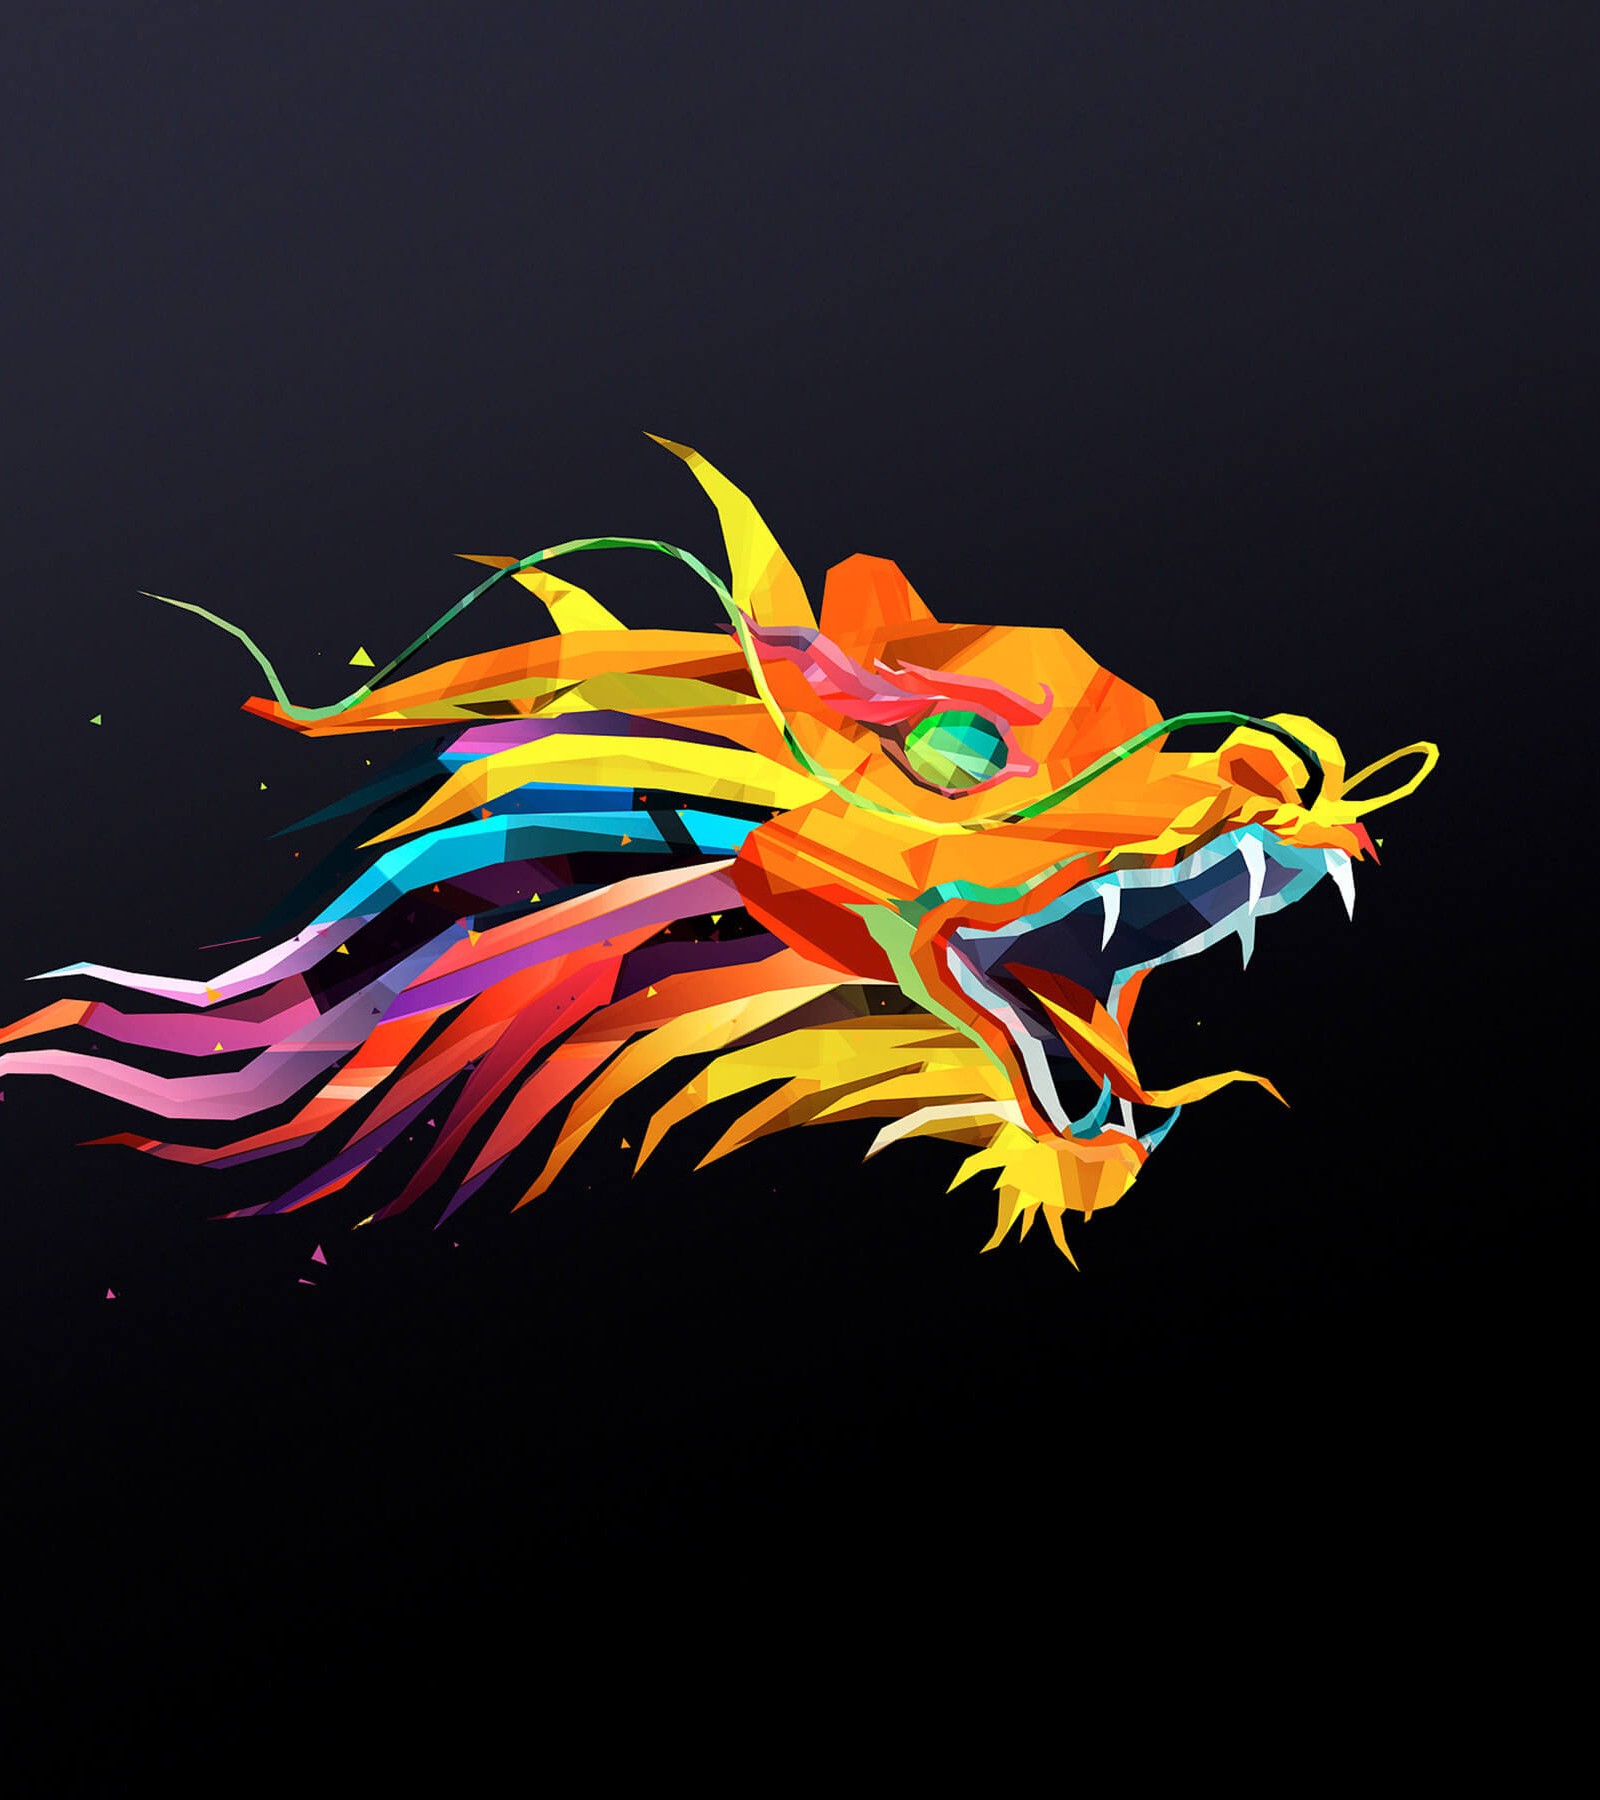 The Dragon HD Wallpaper For Kindle Fire HDx HDwallpaper